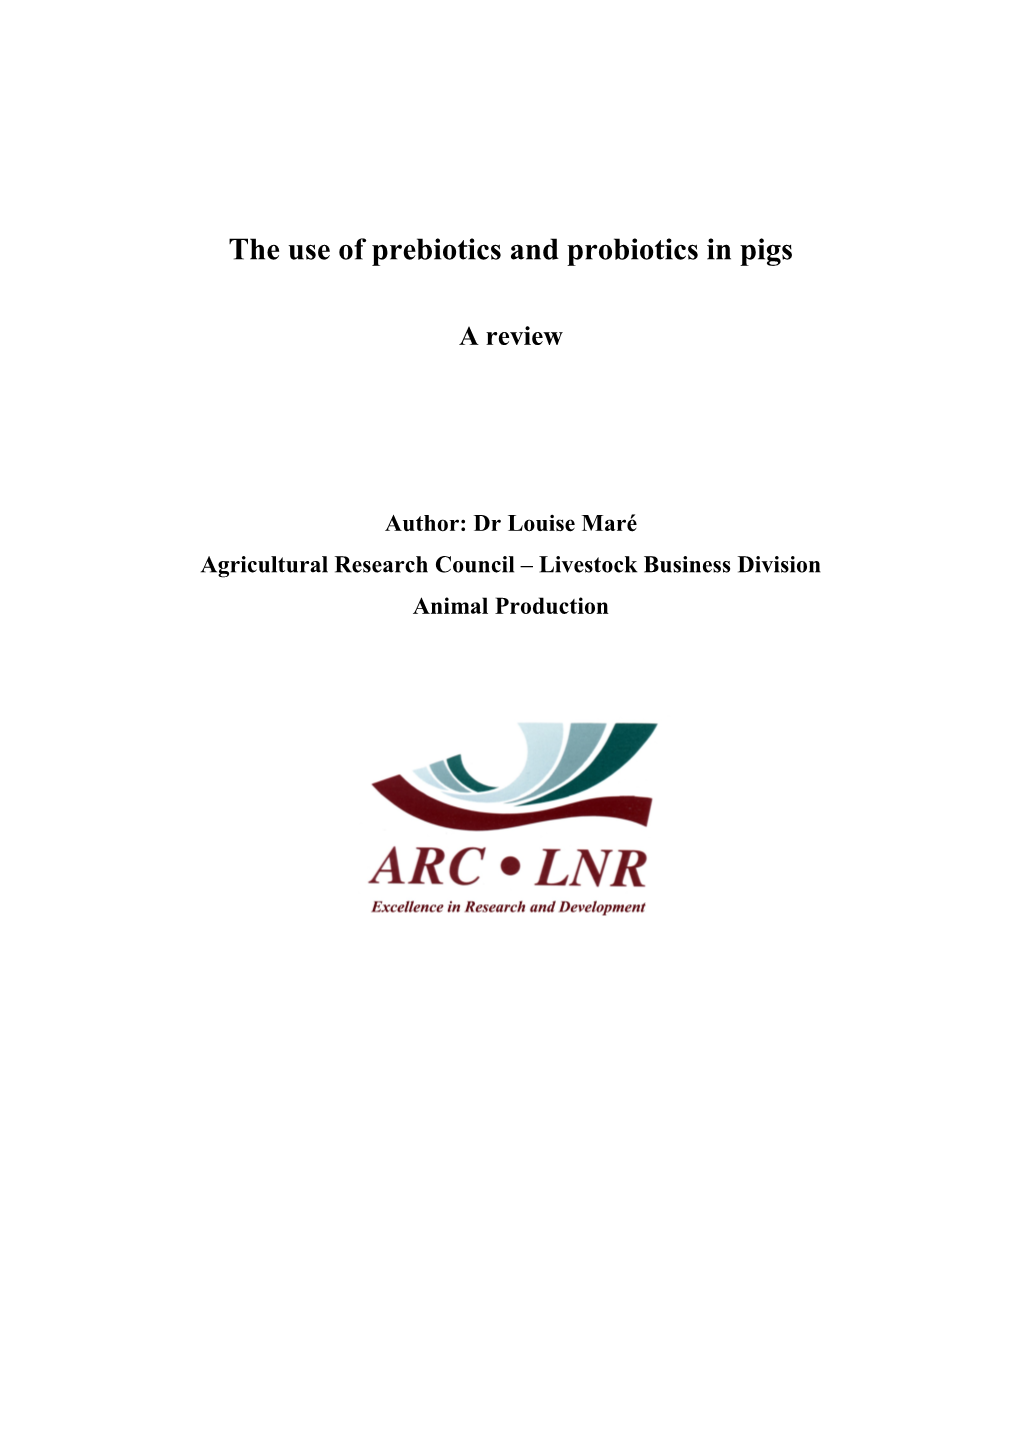 The Use of Prebiotics and Probiotics in Pigs